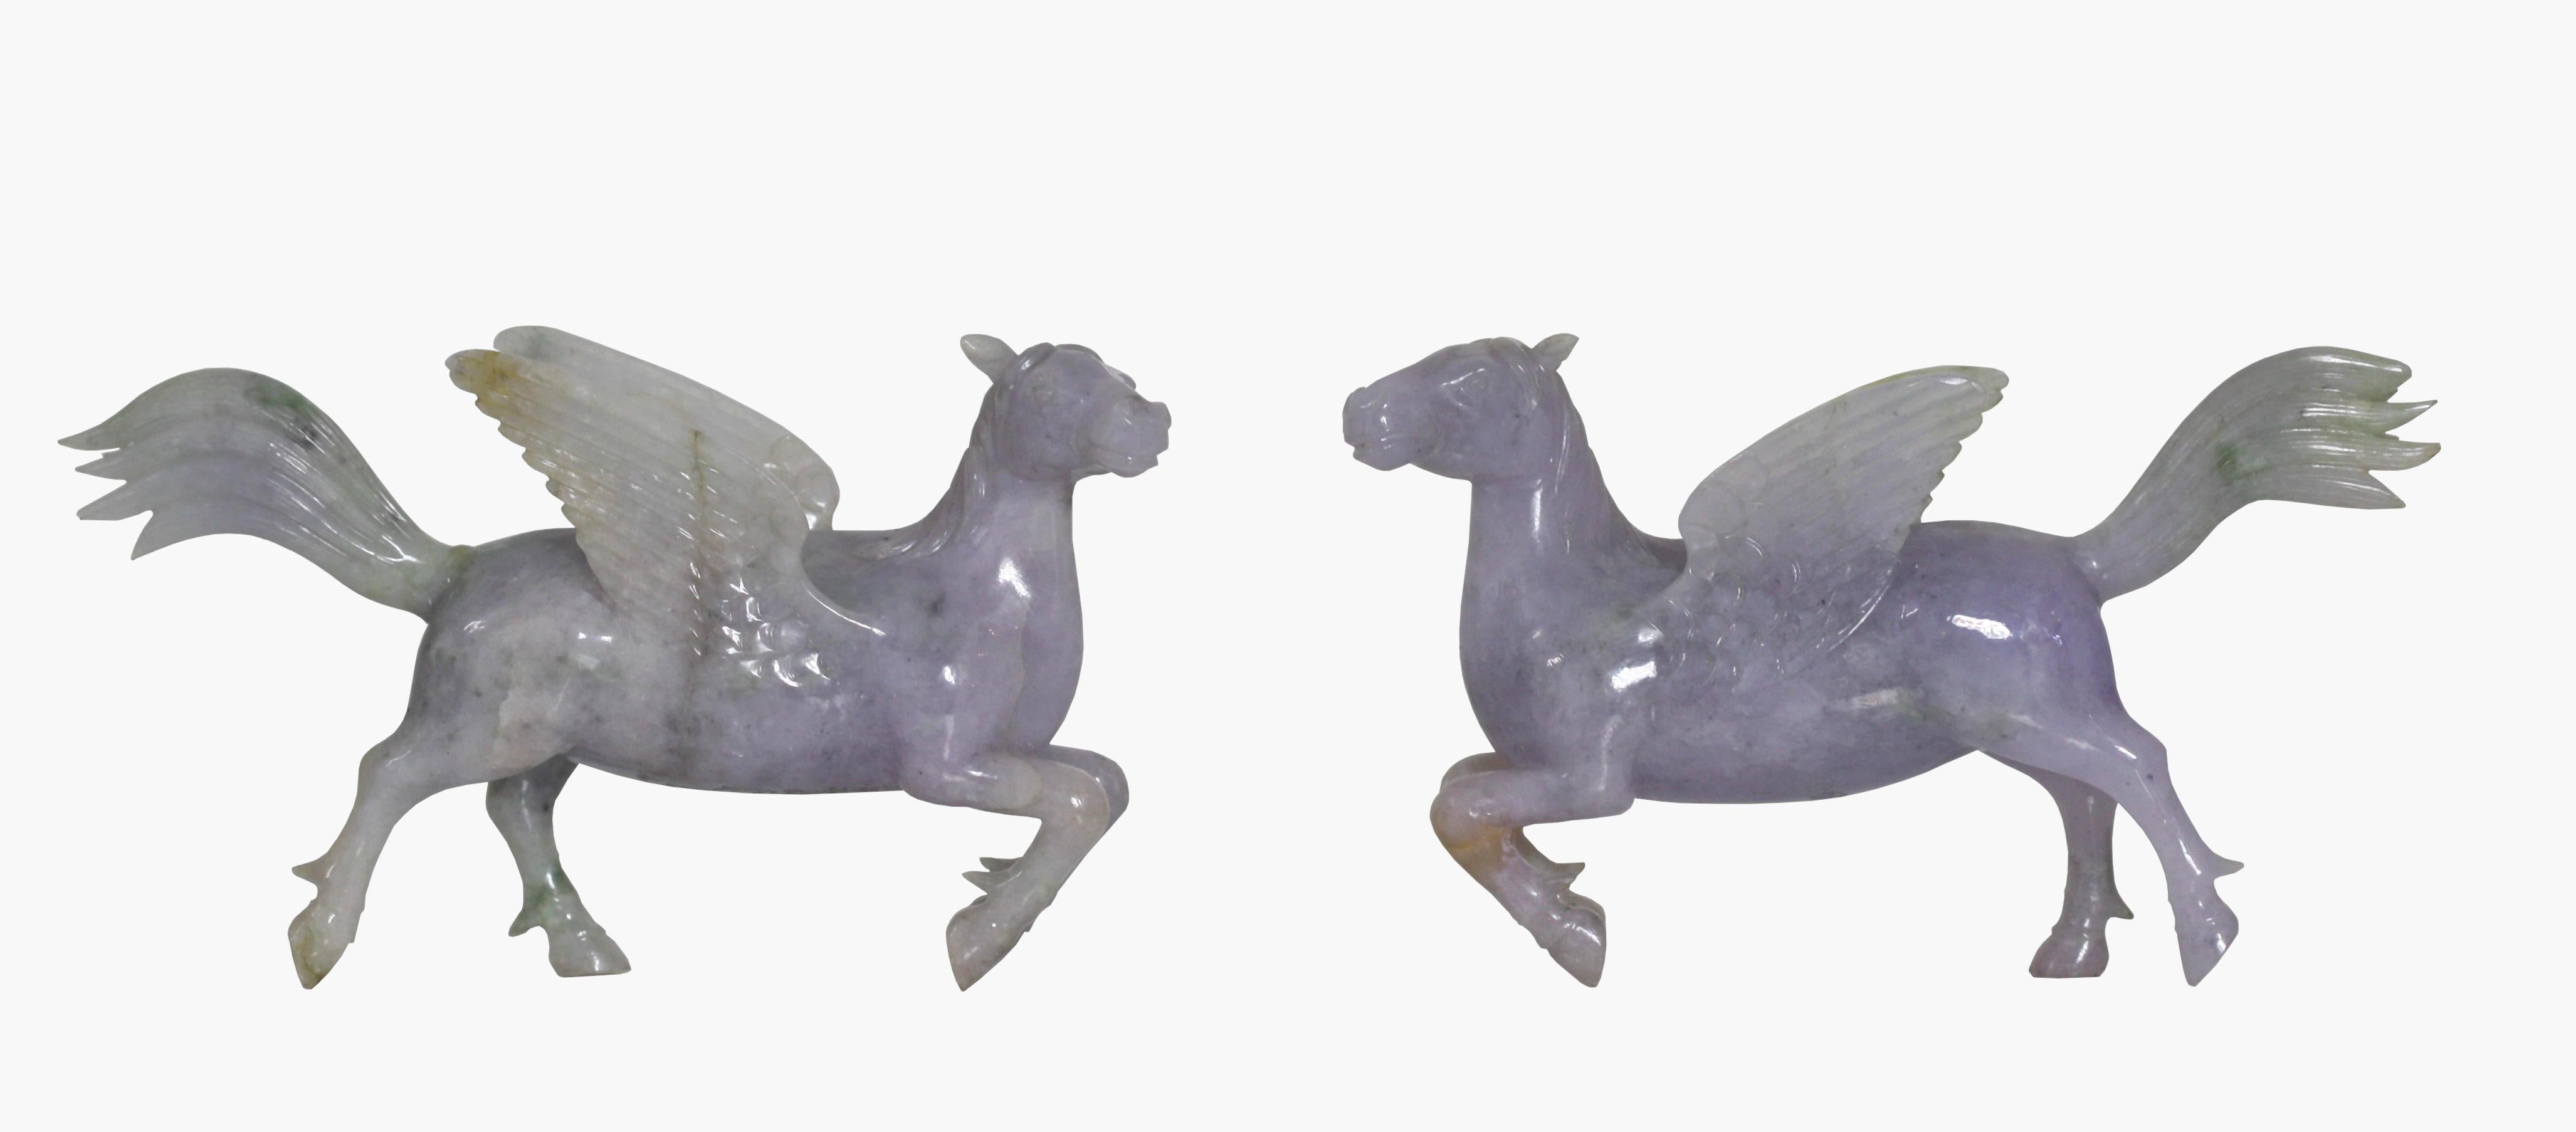 Pair of Chinese carved jade winged horses

Measures: Height 4 in. (10.16 cm.),
Width 7 in. (17.78 cm.)